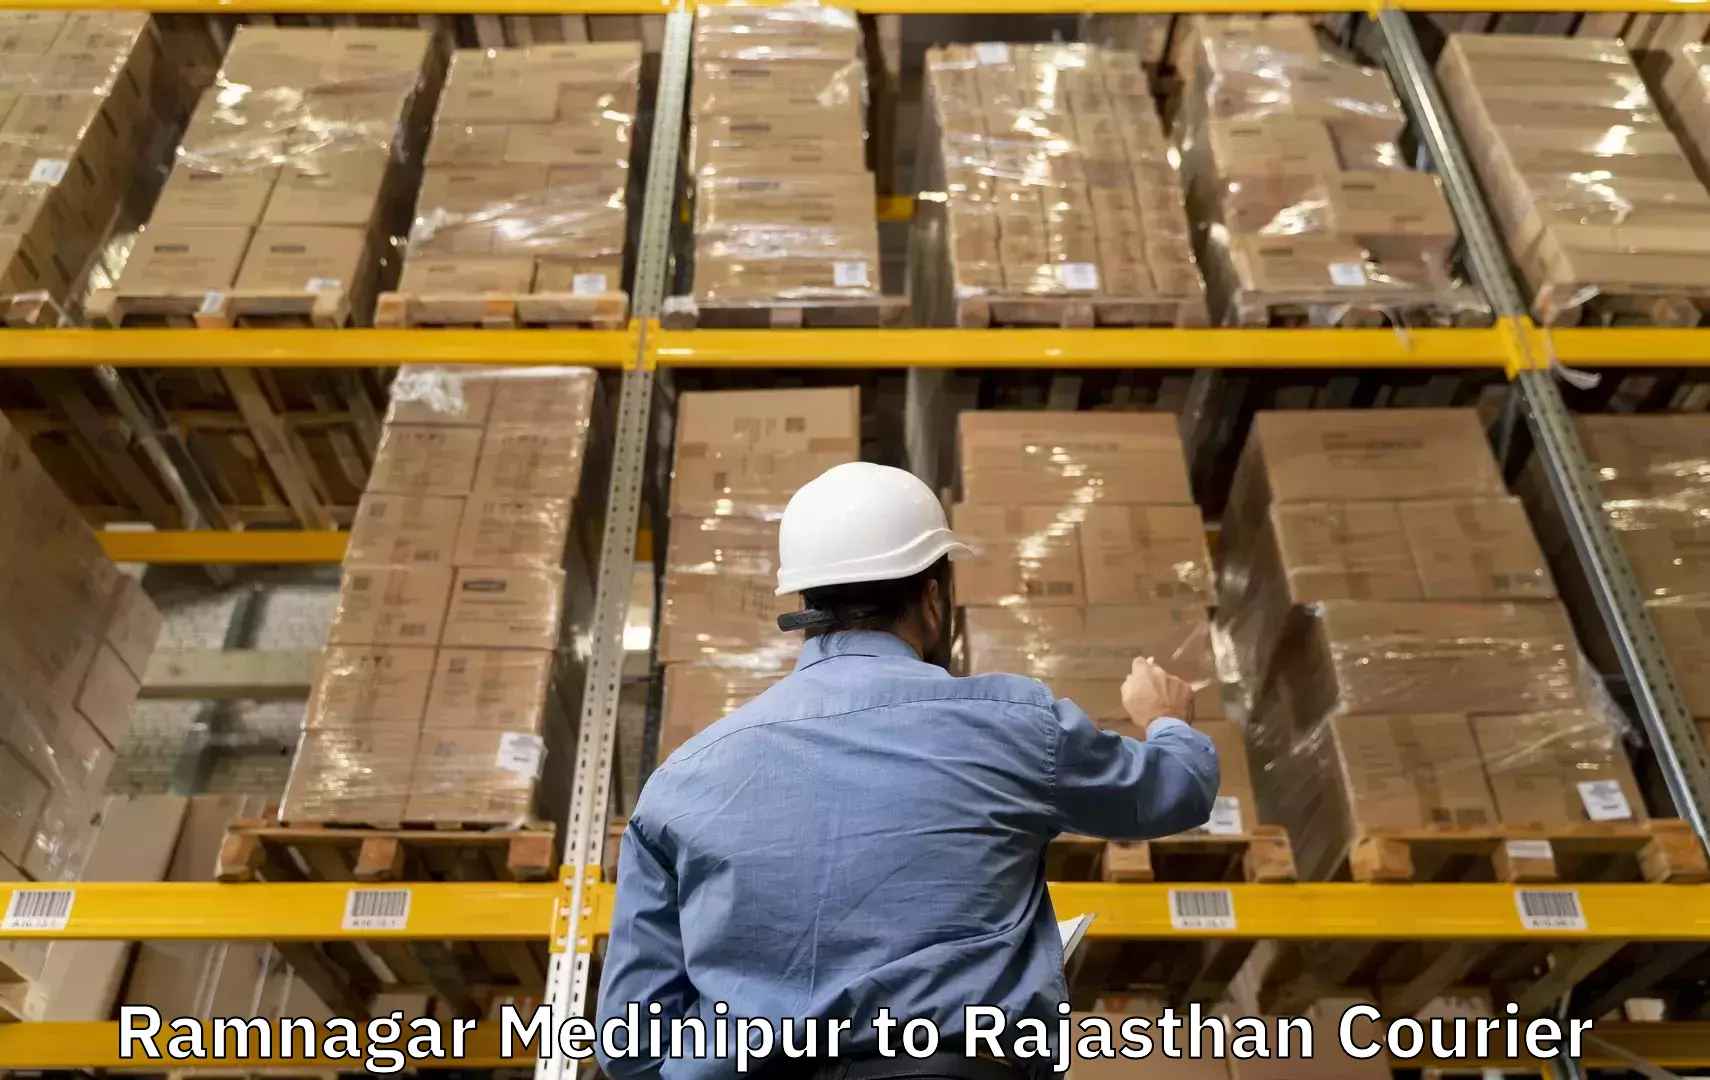 Baggage relocation service Ramnagar Medinipur to Bajore